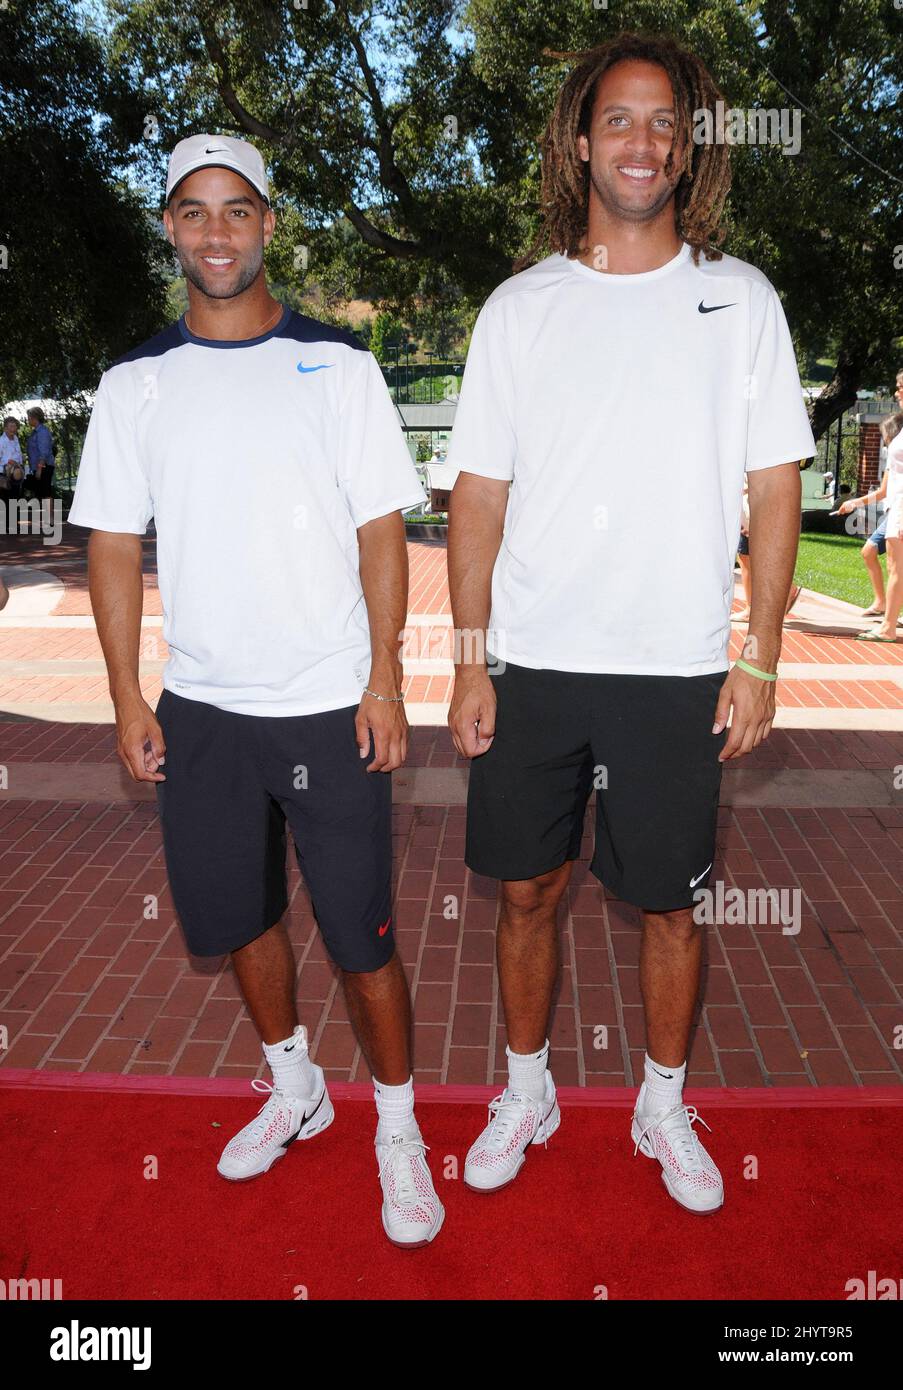 James Blake and Thomas Blake at the Bryan Brothers' All-Star Tennis Smash, at the Sherwood Country Club, Thousand Oaks, CA. Stock Photo